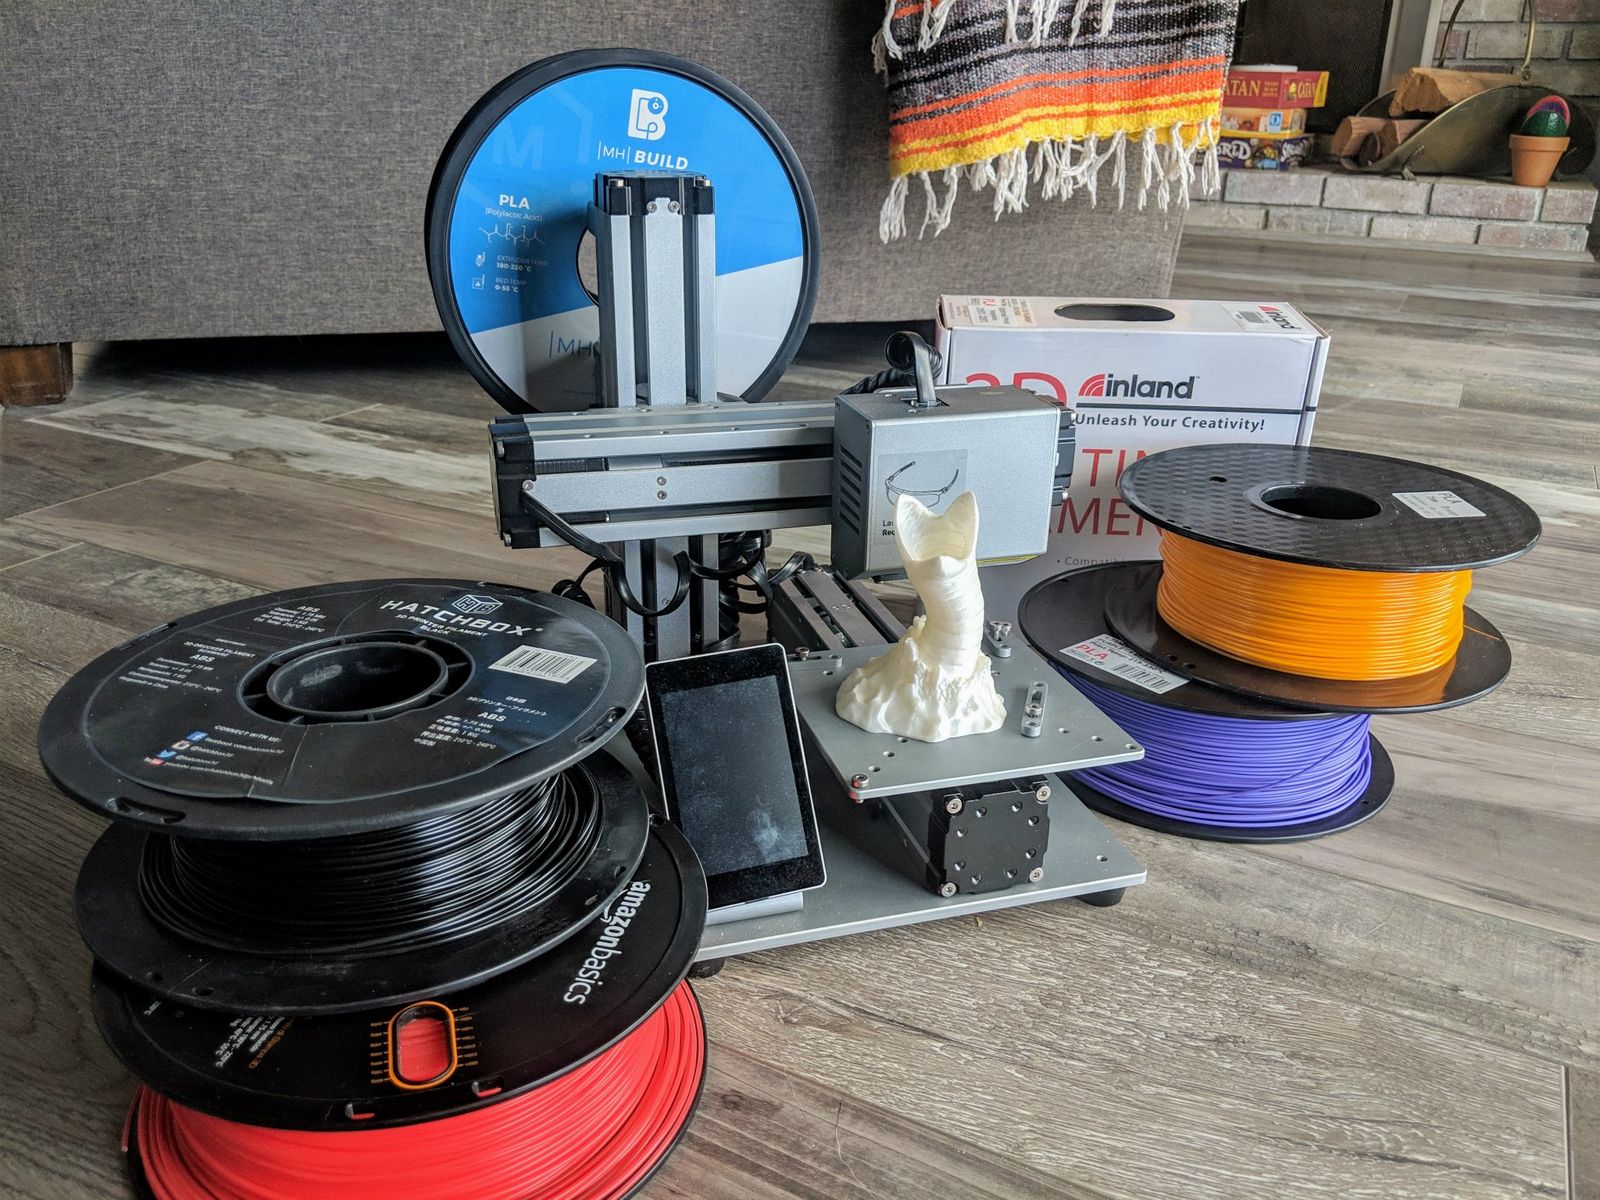 Filament and printer